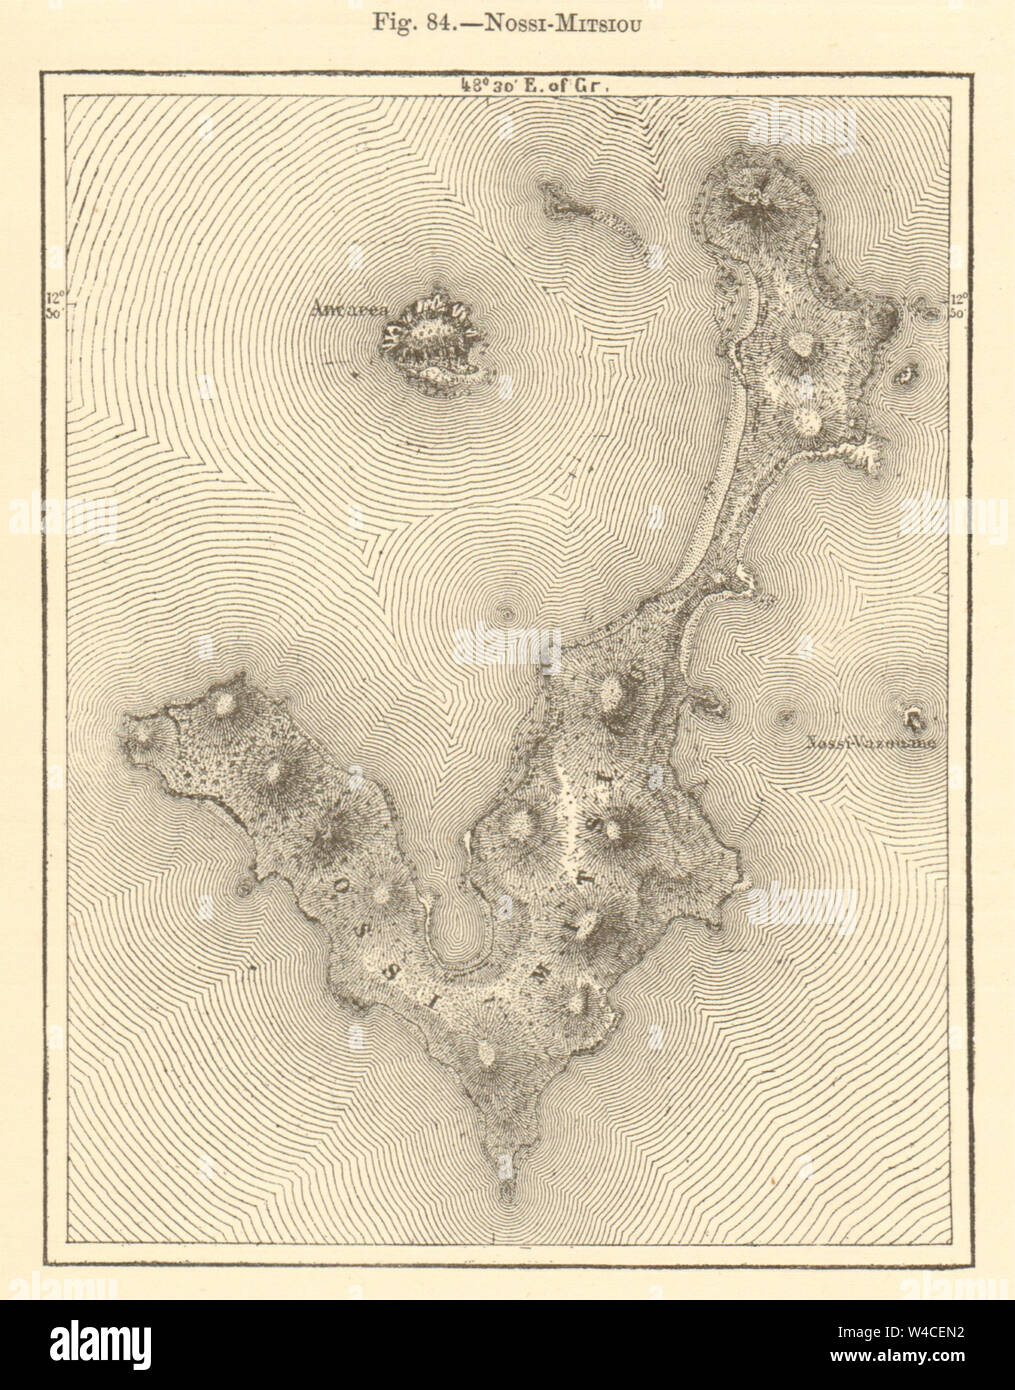 Nossi-Mitsiou. Madagascar. Nosi Mitsio. La carte graphique 1886 ancienne Banque D'Images